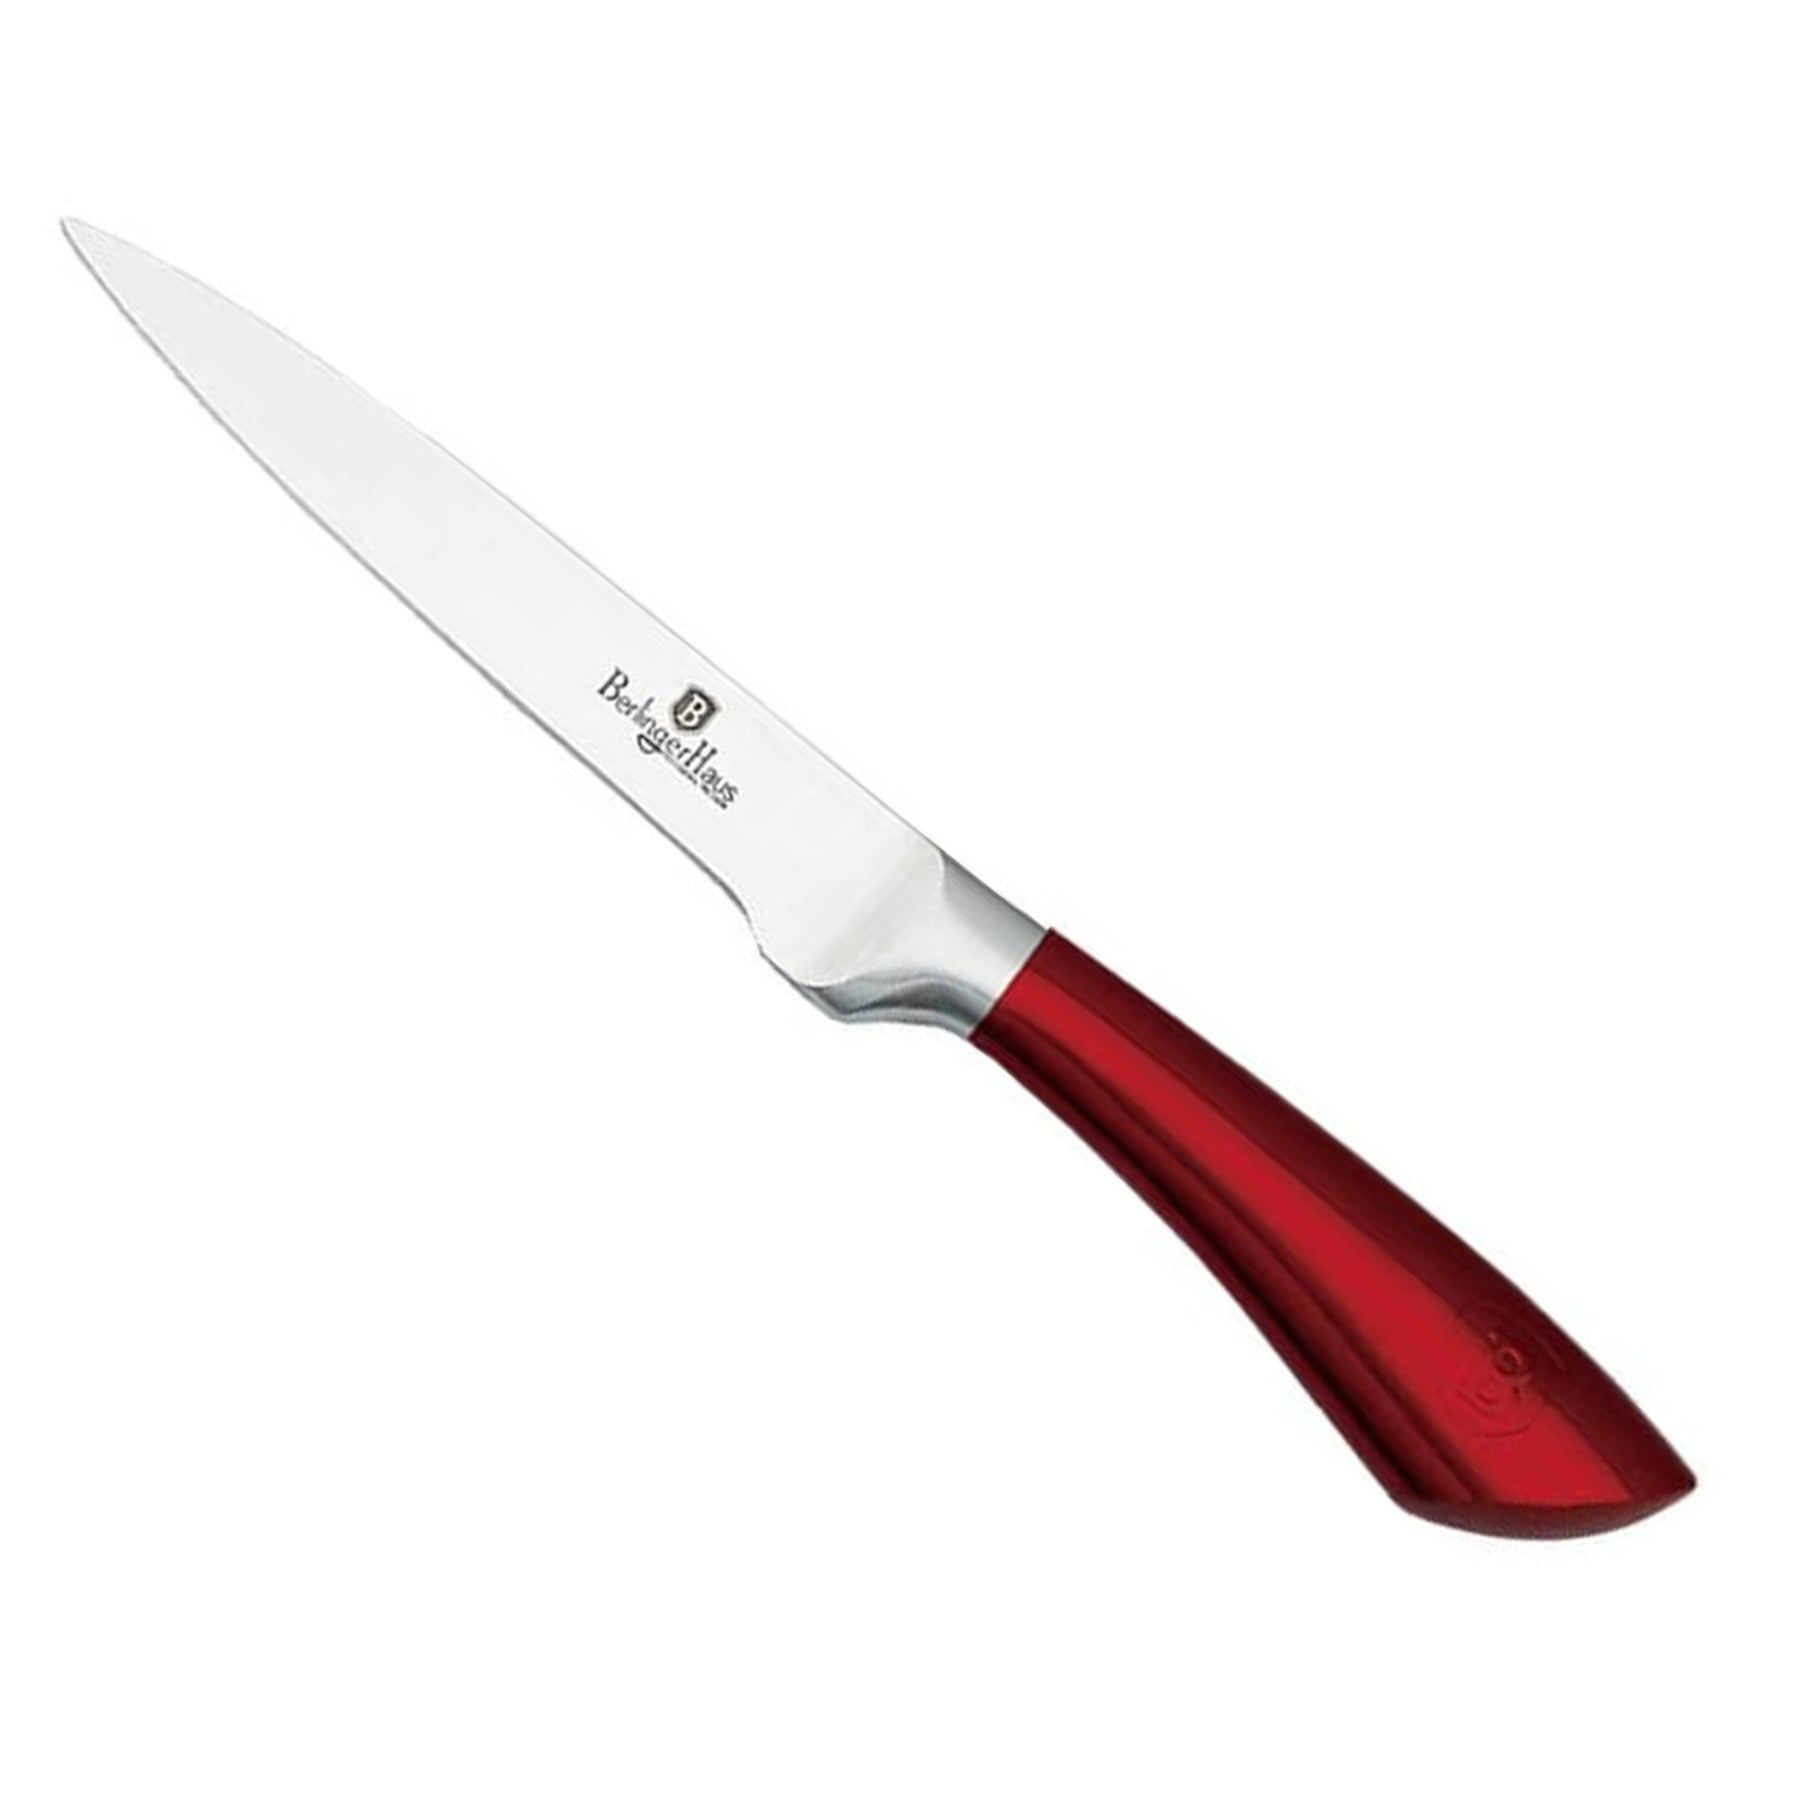 Utility Knife - Burgundy Color